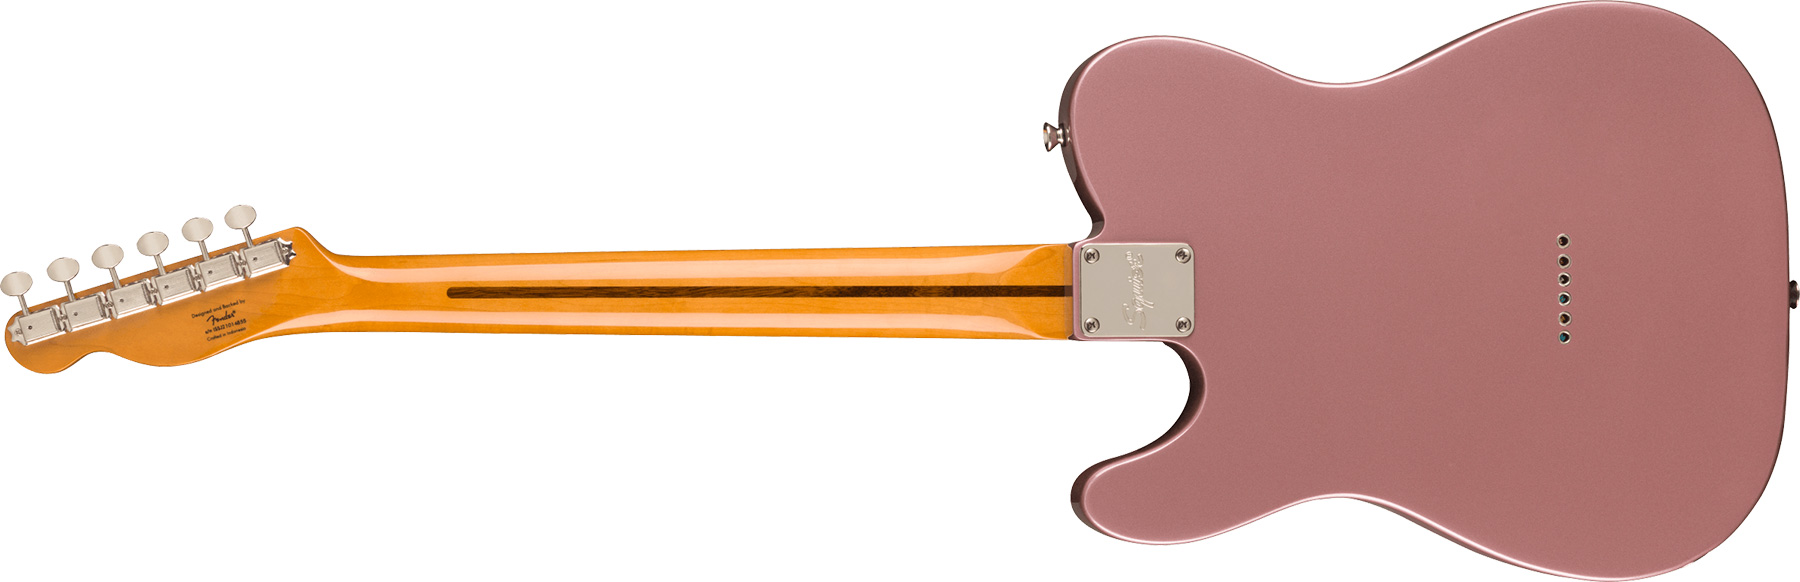 Squier Tele '50s Parchment Pickguard Classic Vibe Fsr 2s Ht Mn - Burgundy Mist - Televorm elektrische gitaar - Variation 1